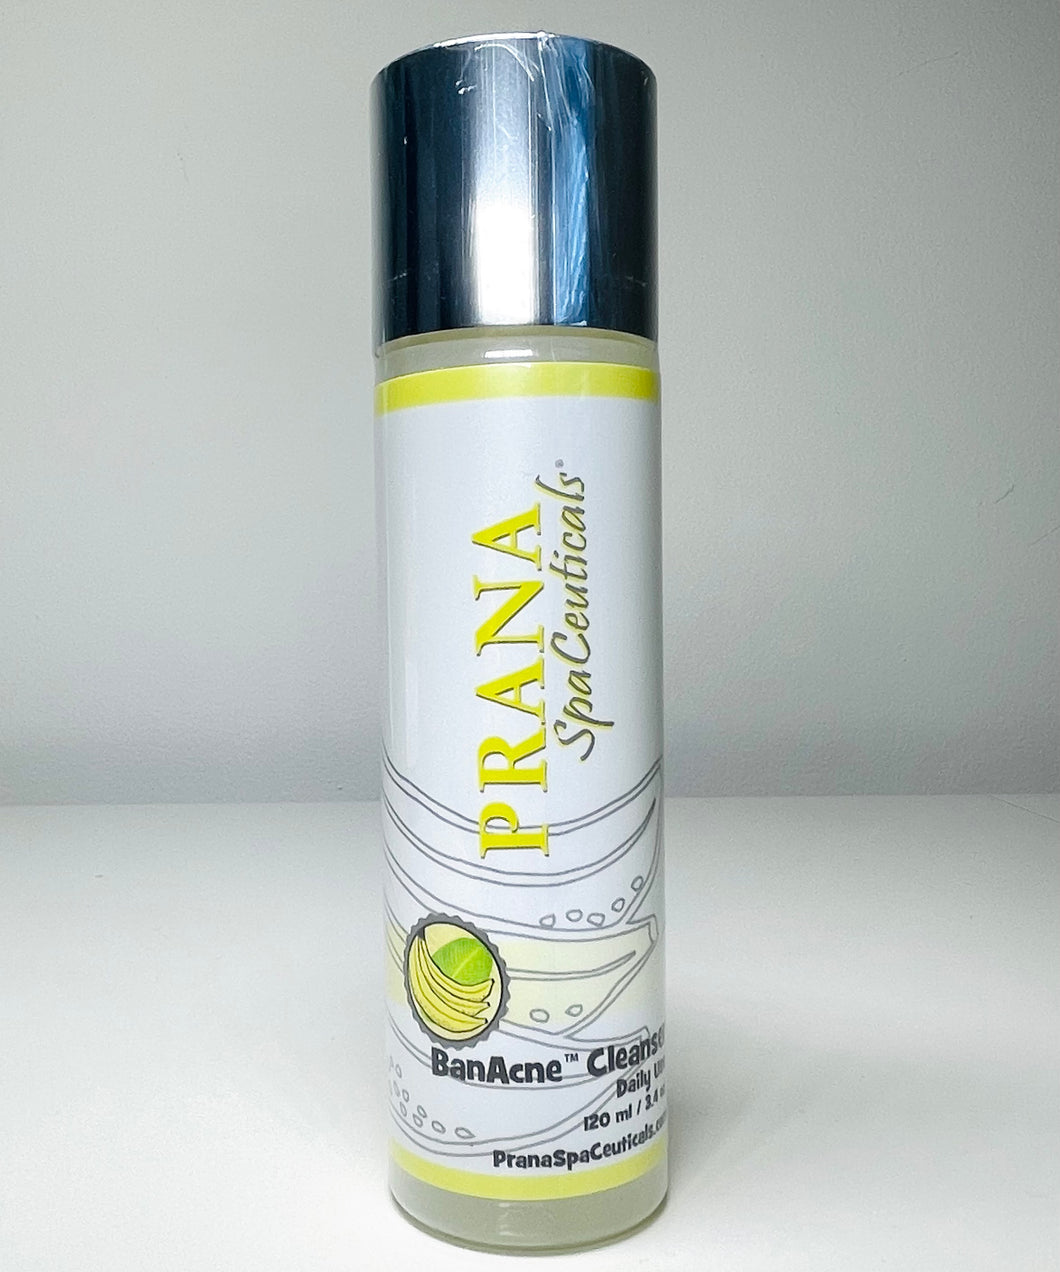 Prana SpaCeuticals Teenage Acne BanAcne Cleanser 3.4oz